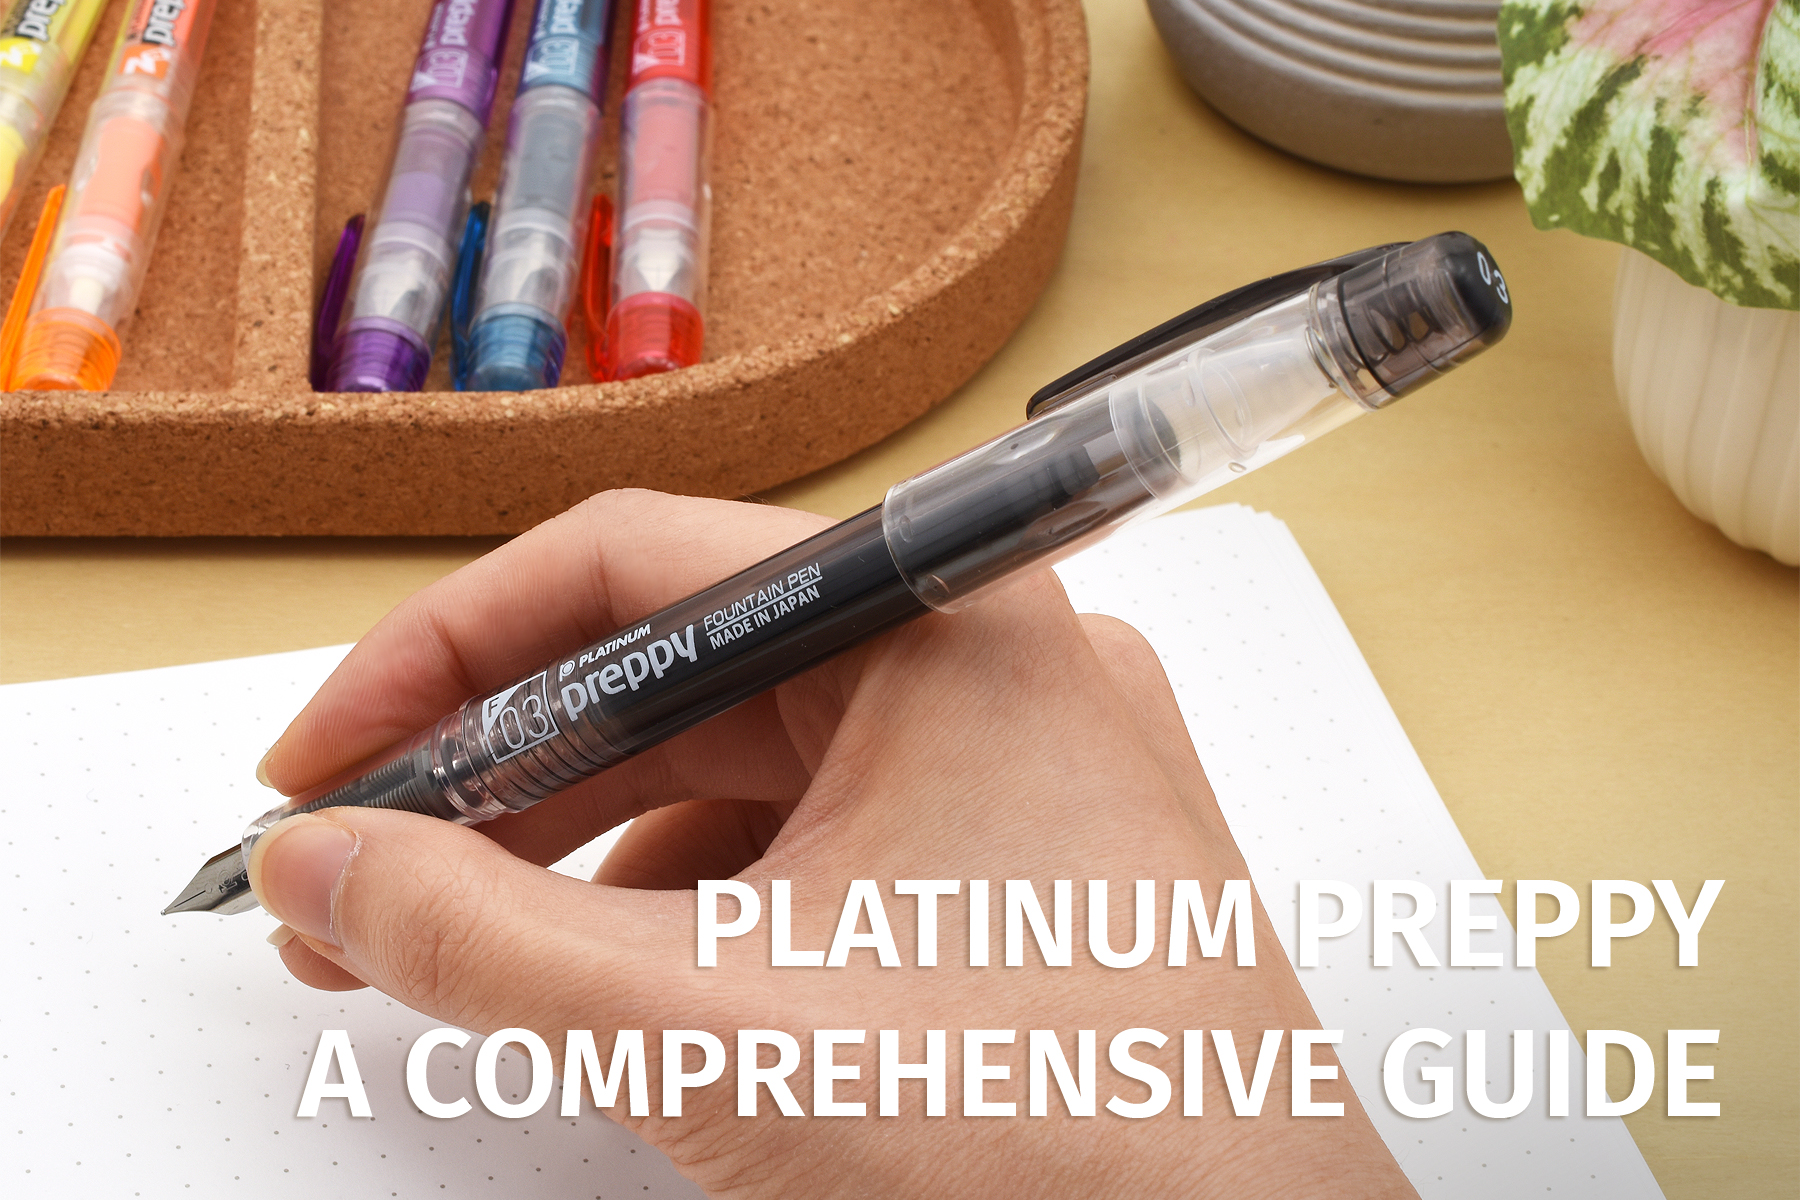 Platinum Preppy Fountain Pen, Crystal